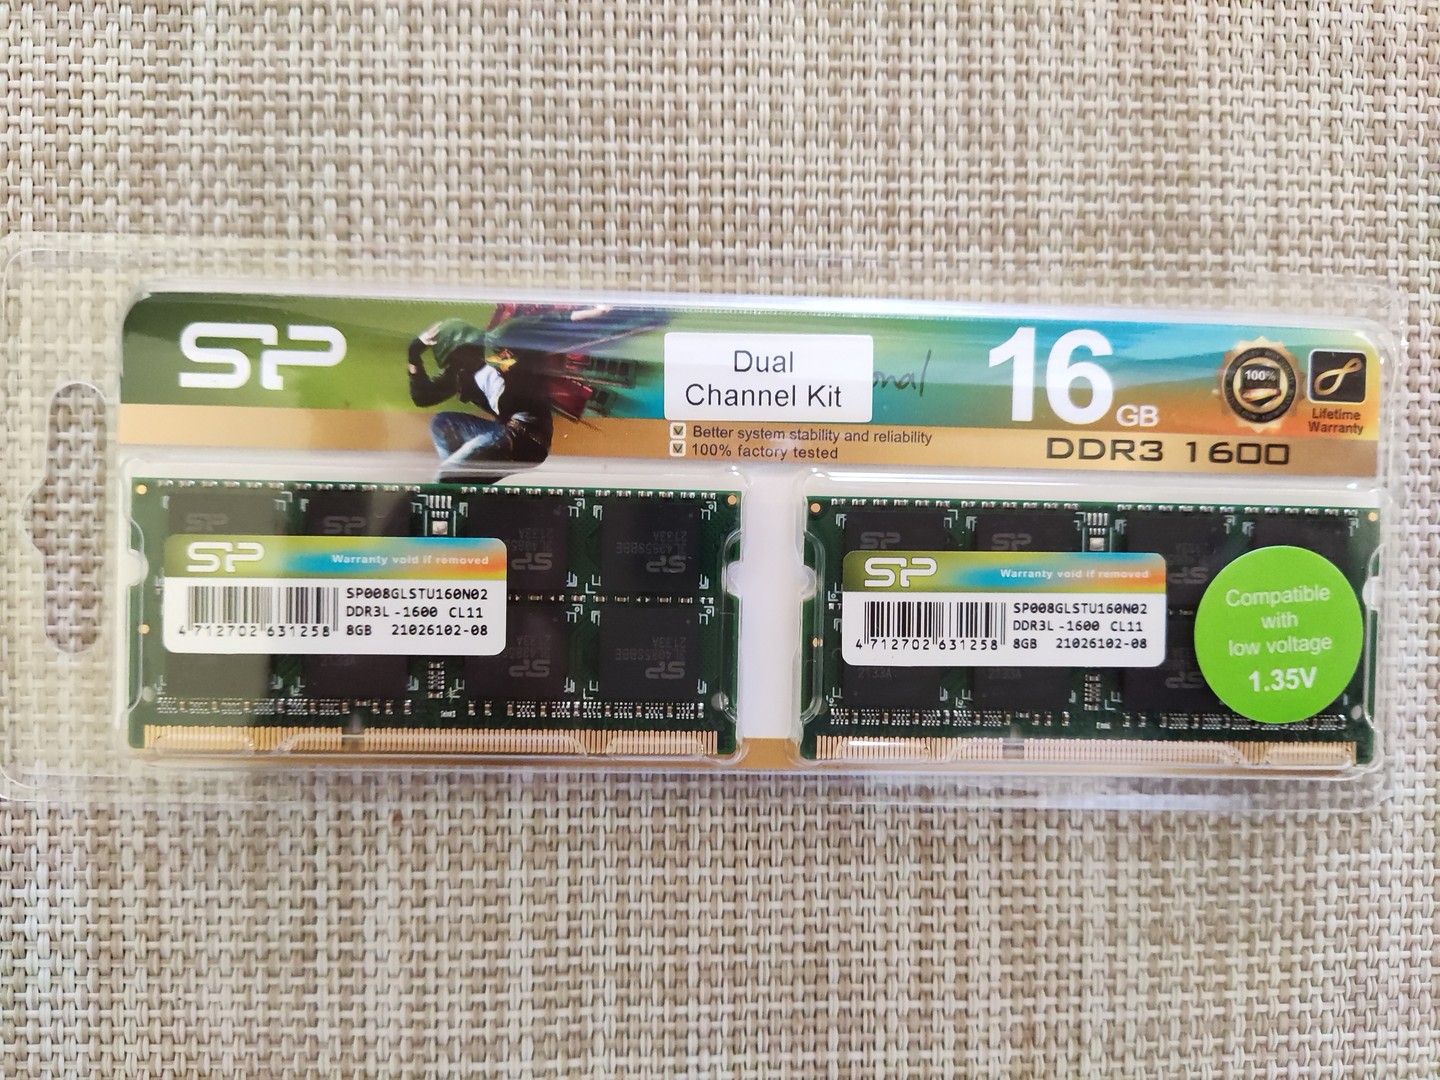 computadoras y laptops - Memorias RAM DDR3 1600 10661 1333 16 GB (2x8GB) 204 pin 1.5v /1.35 Silicon power